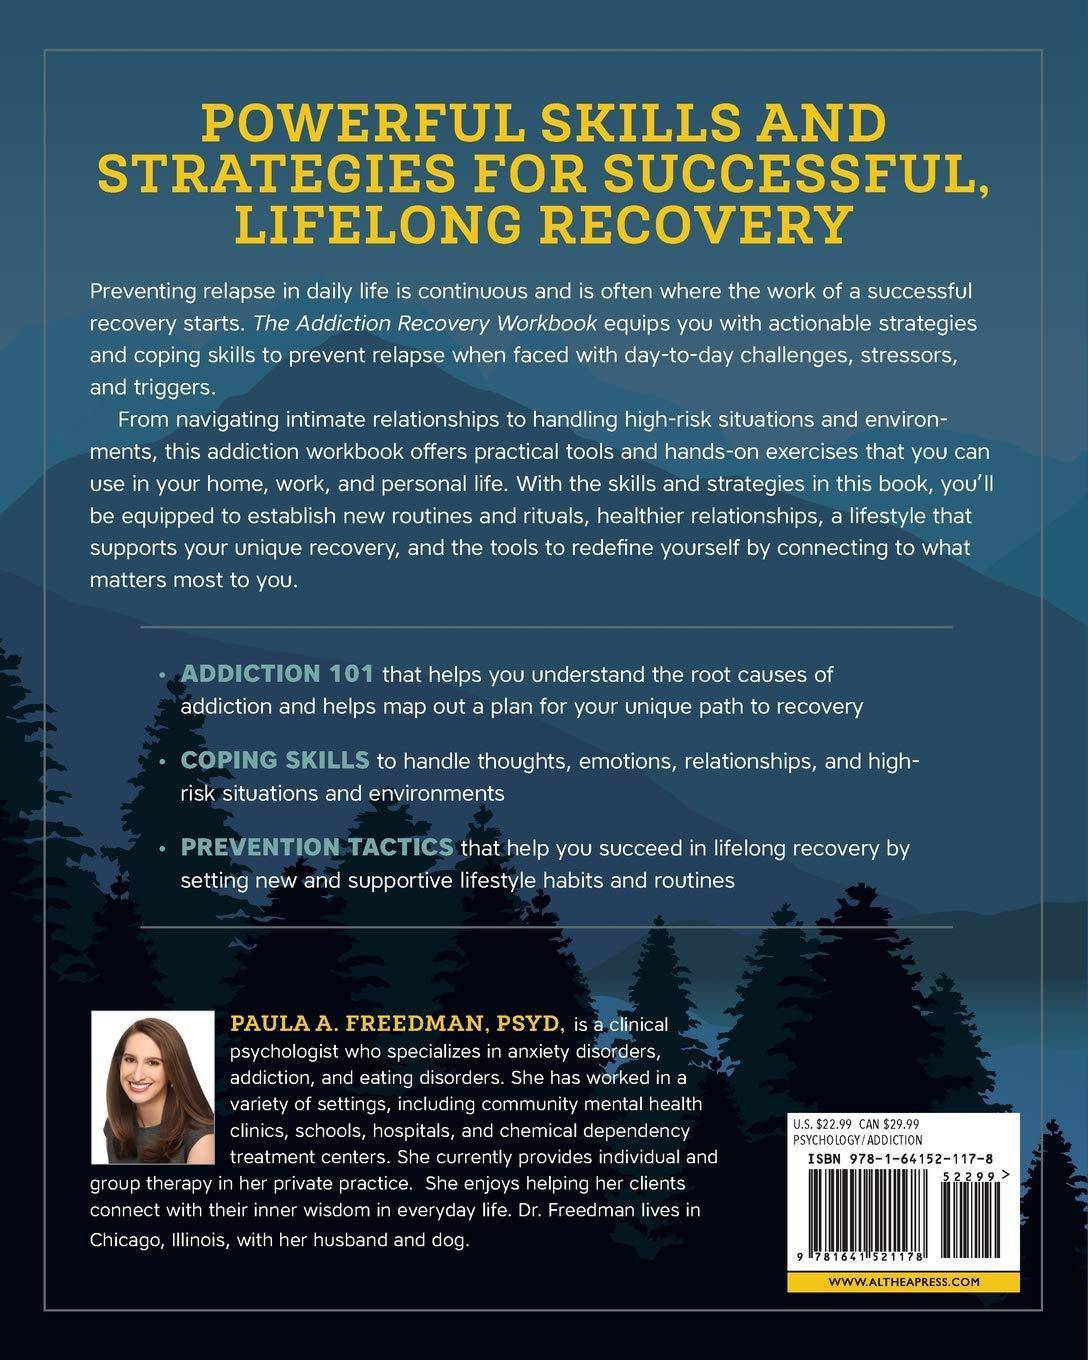 Addiction Recovery Workbook: Powerful Skills for Preventing Rela - SureShot Books Publishing LLC